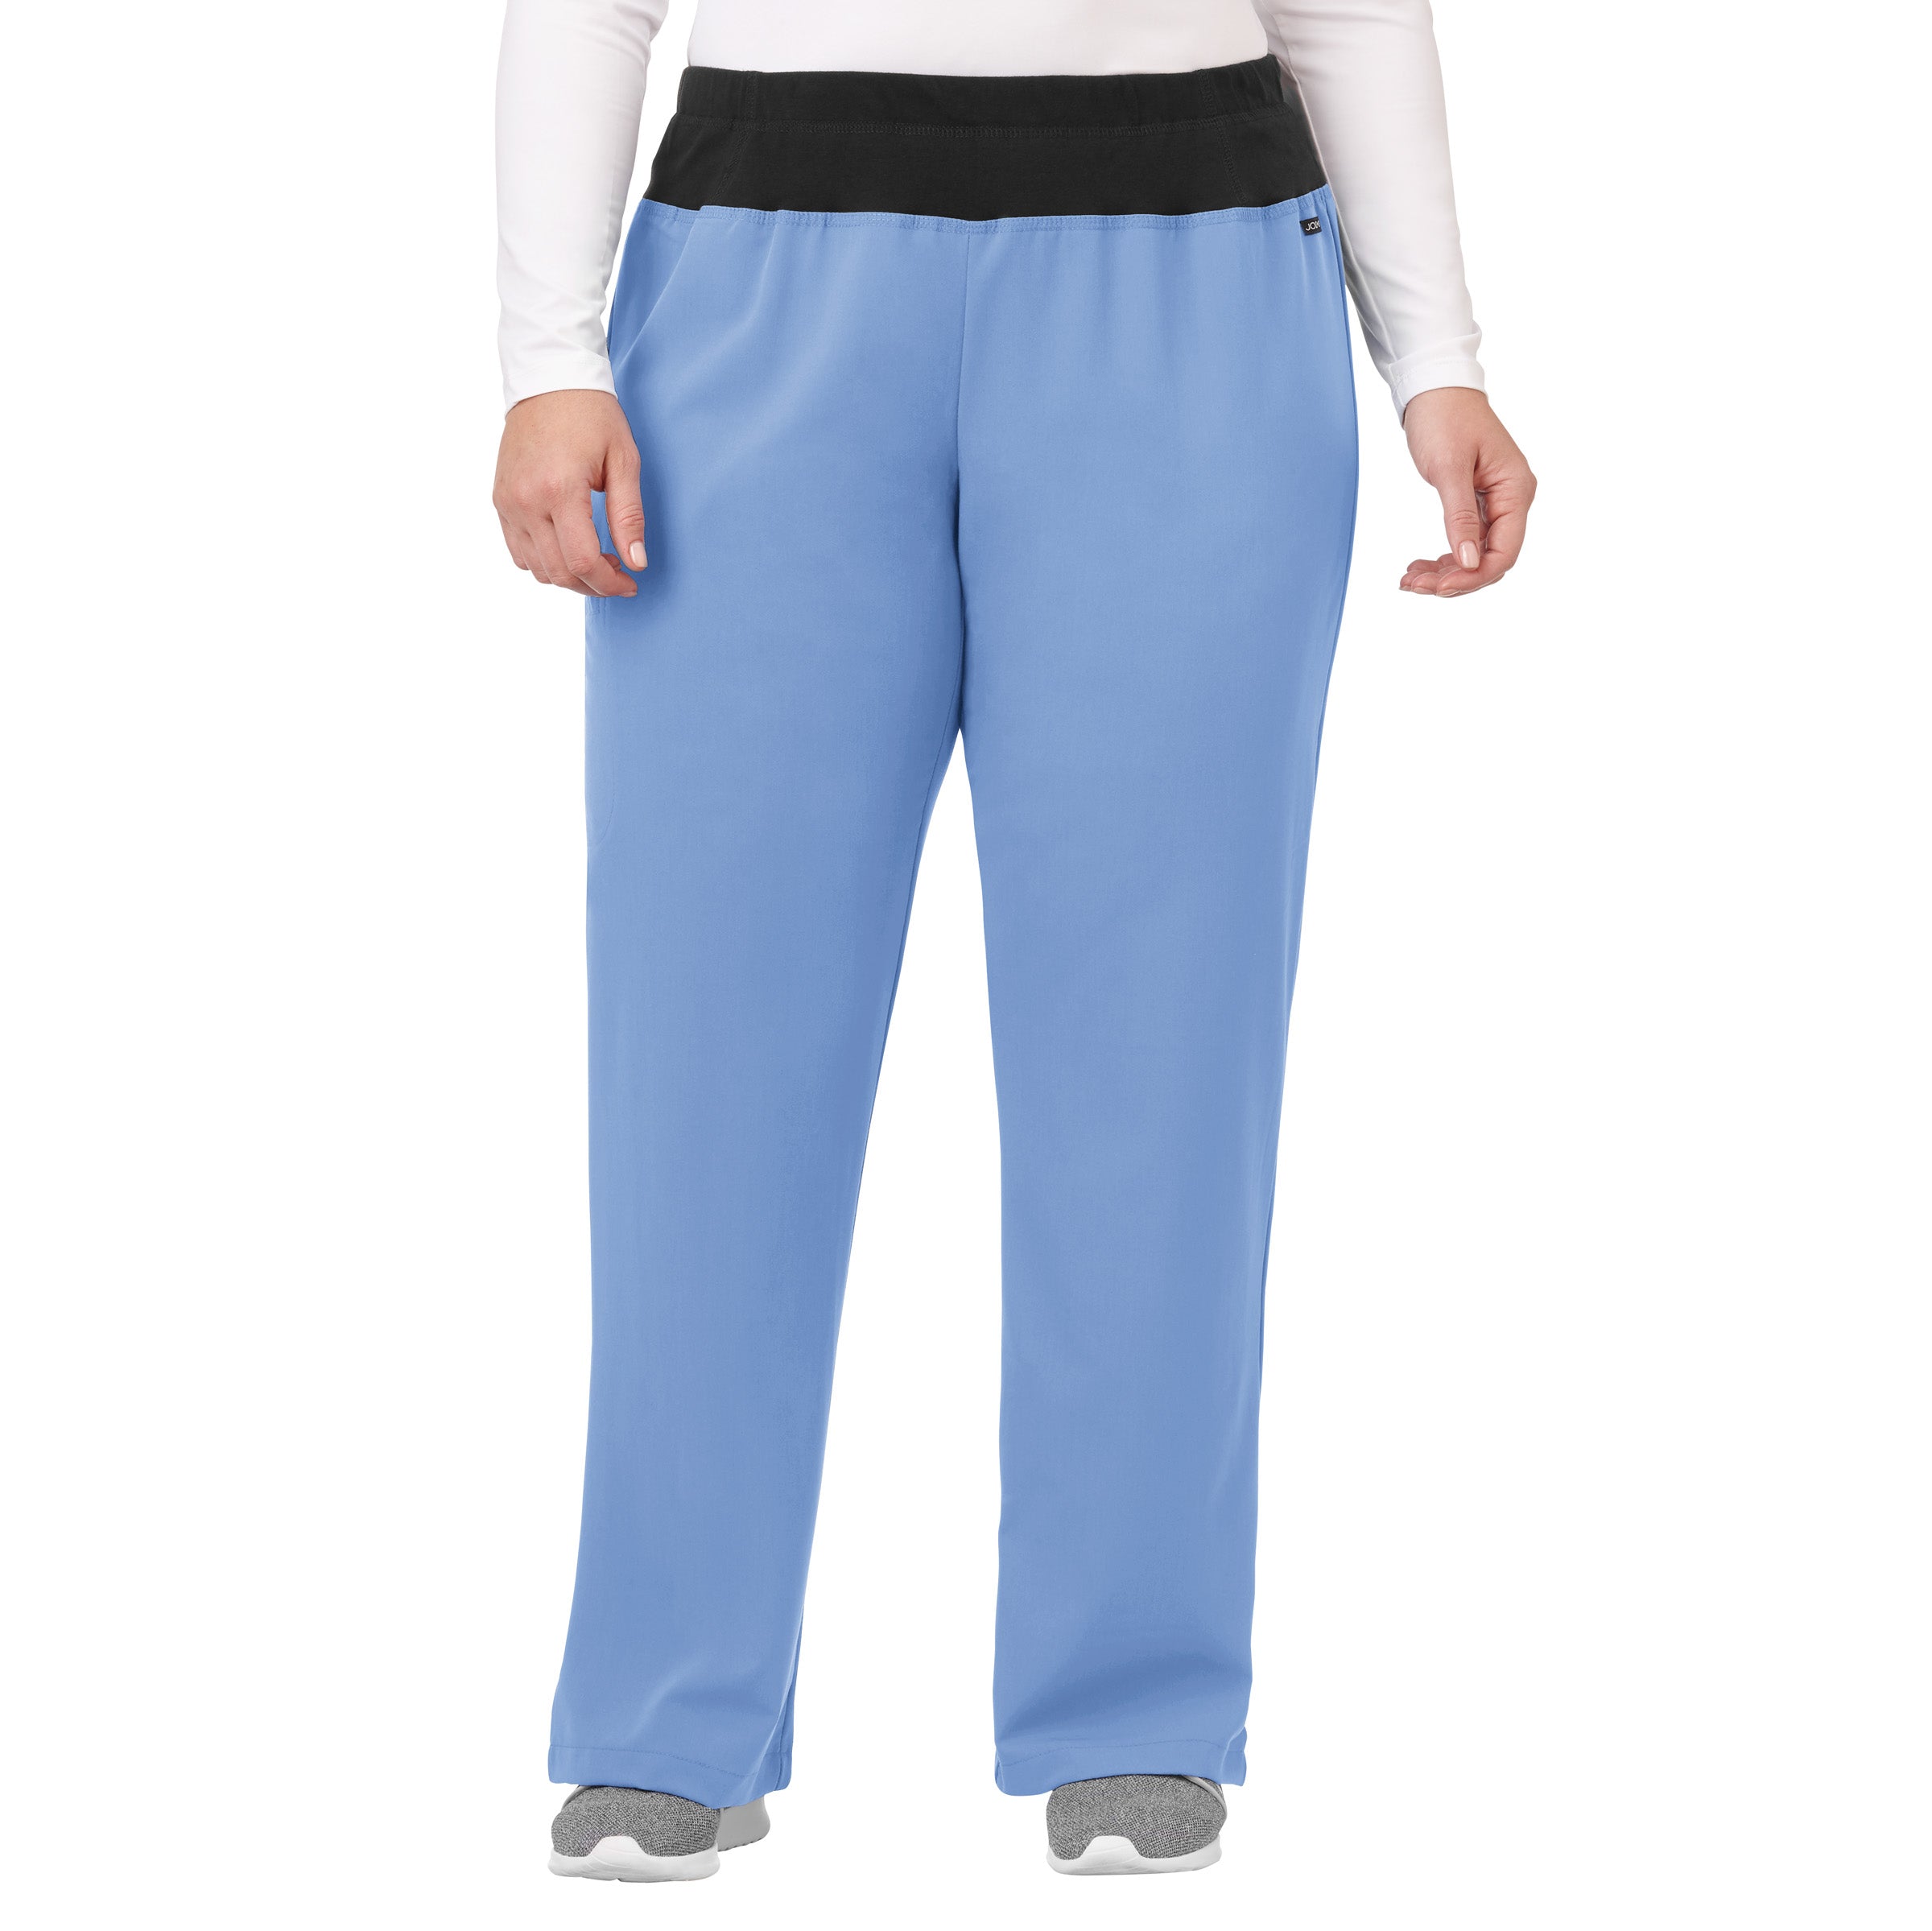 Jockey Scrubs 2358 Women's Soft Comfort Yoga Pant in Best Price